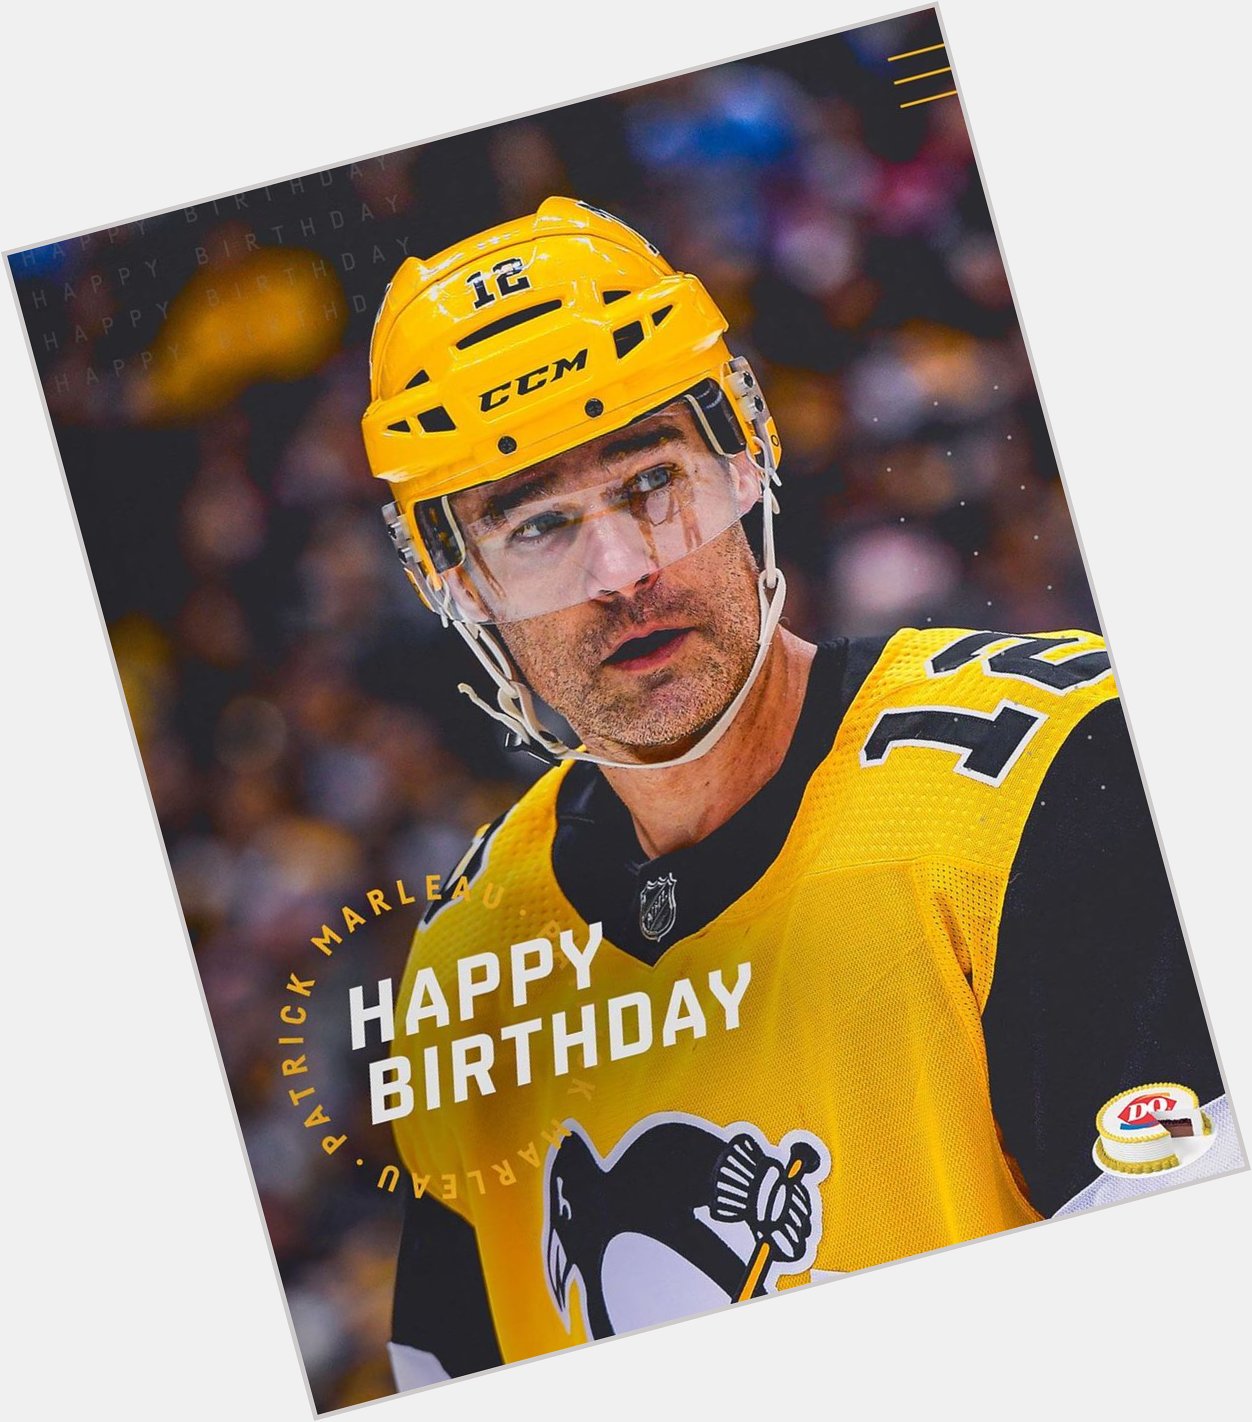 Pittsburgh Penguins: Wishing Patrick Marleau a very happy birthday! ... 
 
 